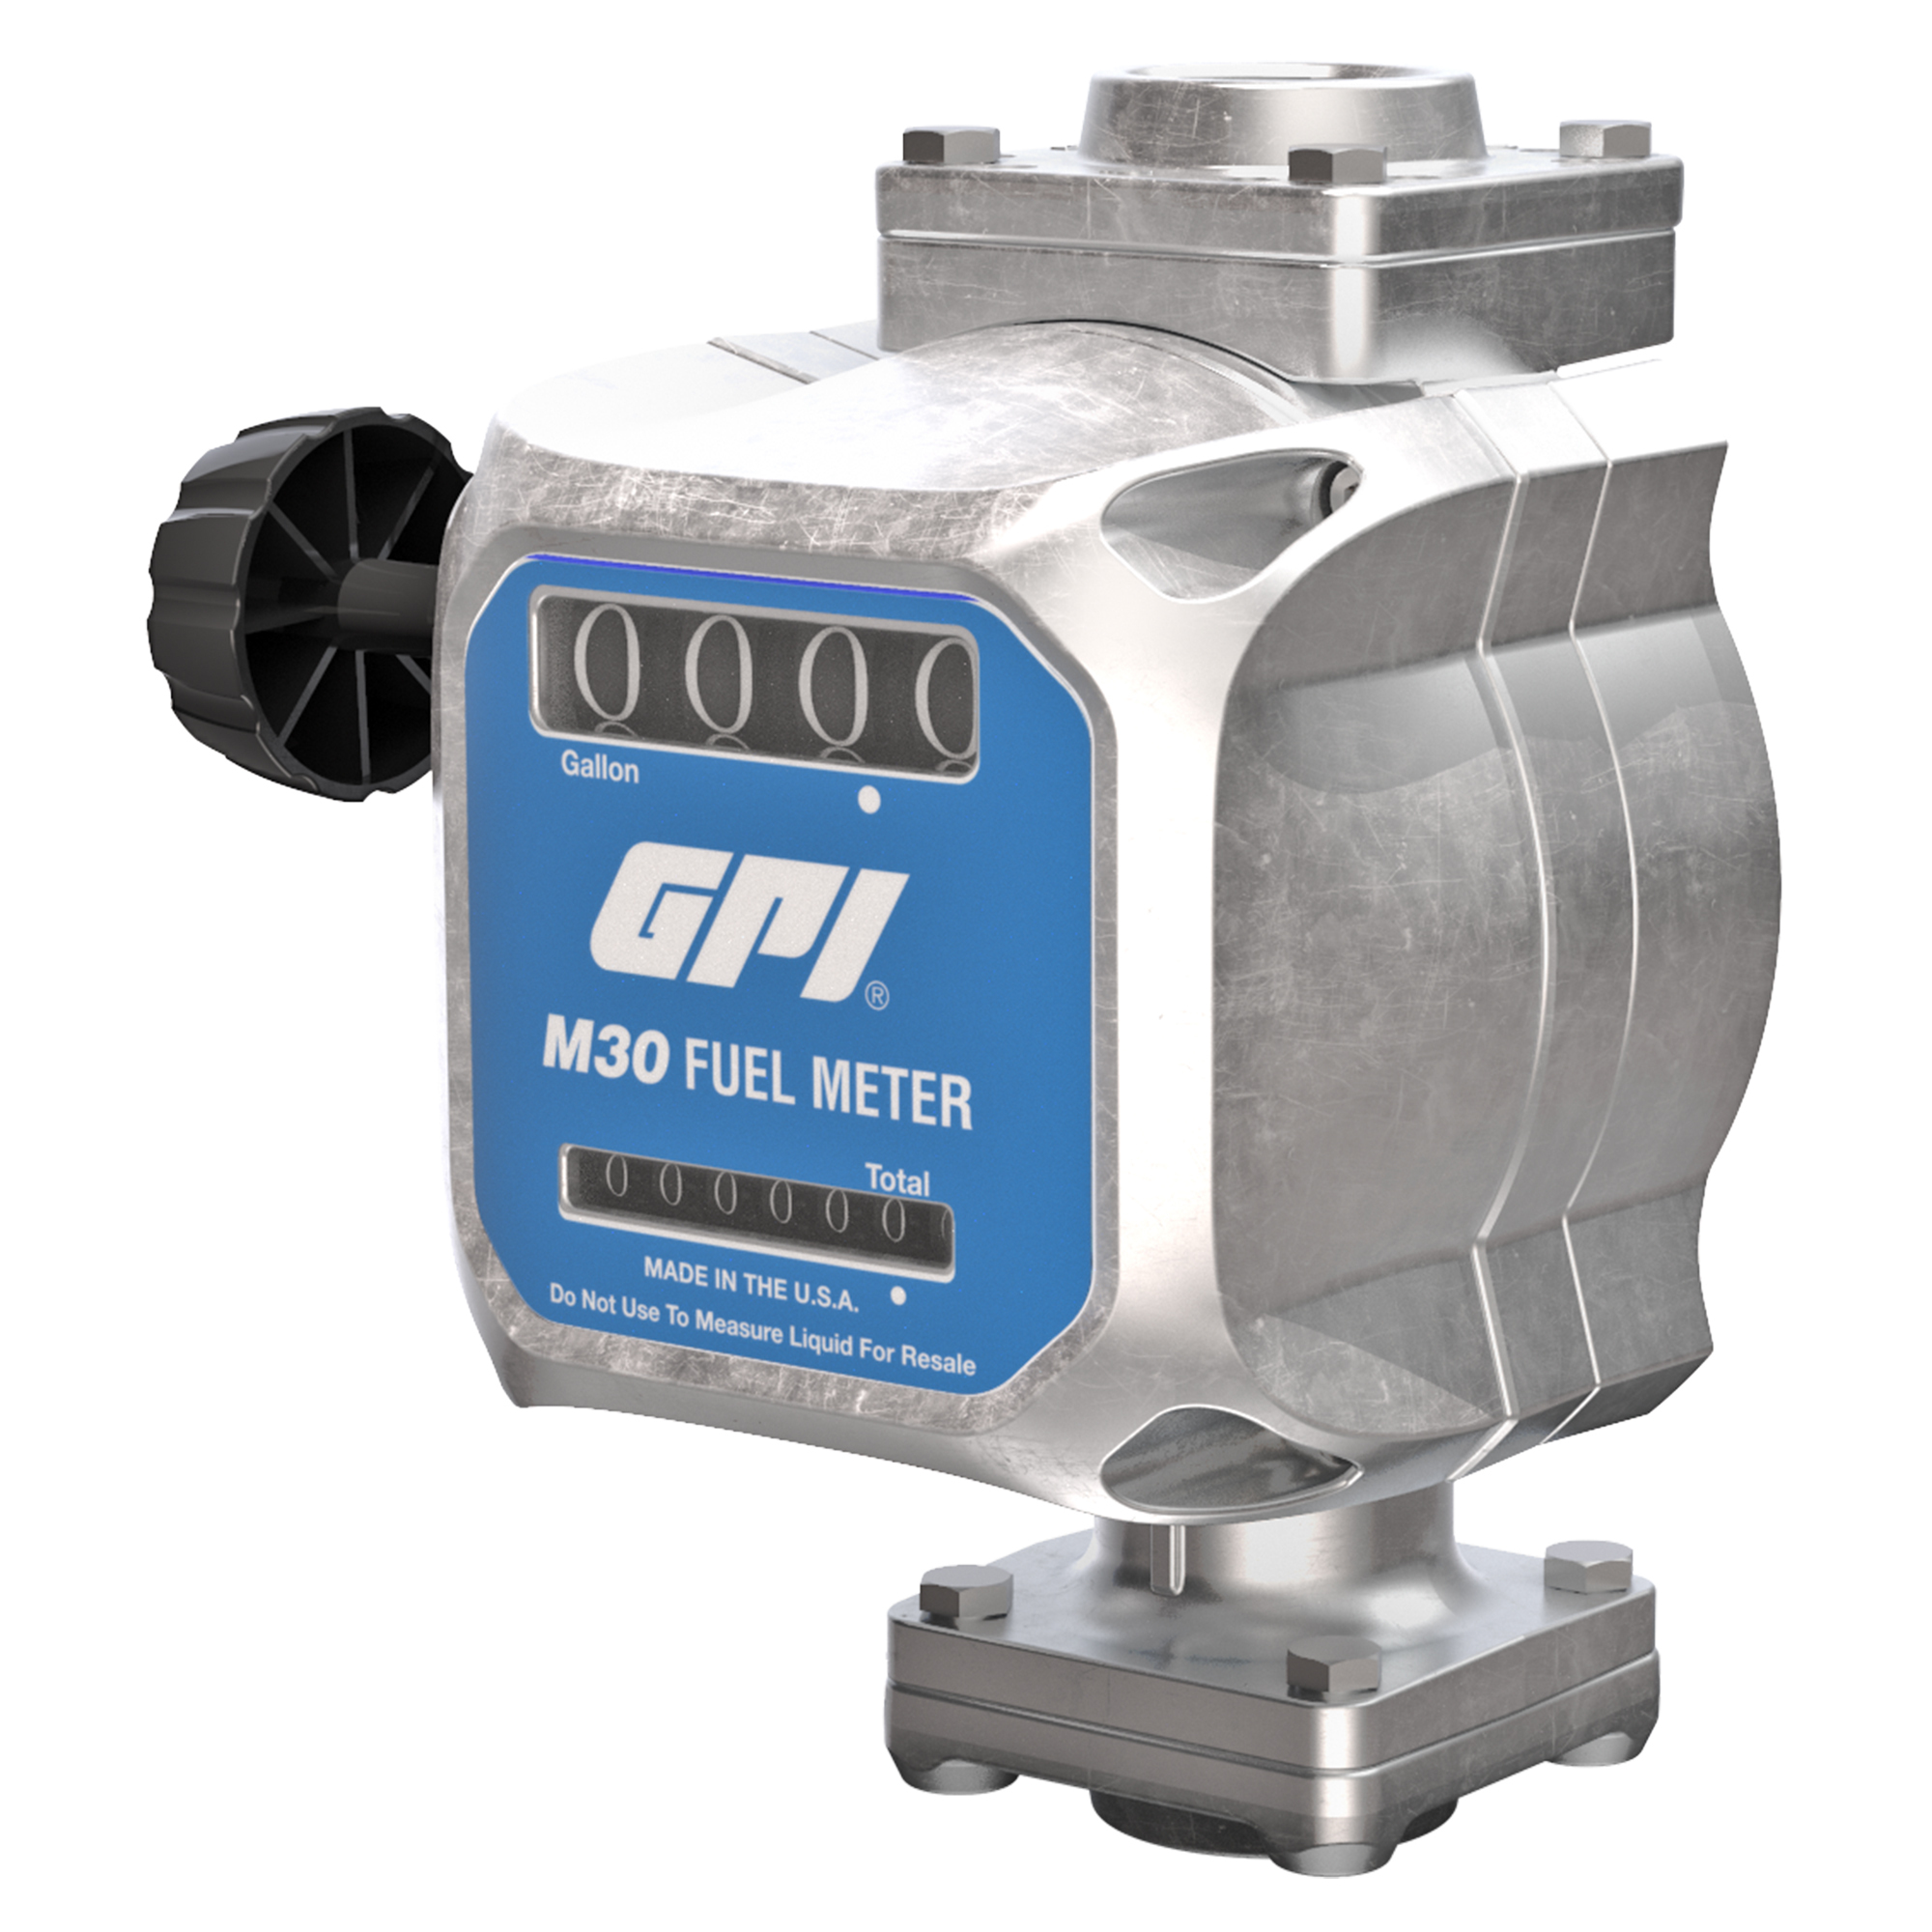 GPI Quick-Fit Mechanical Fuel Meter, 1Inch Inlet/Outlet, Model M30-G8N